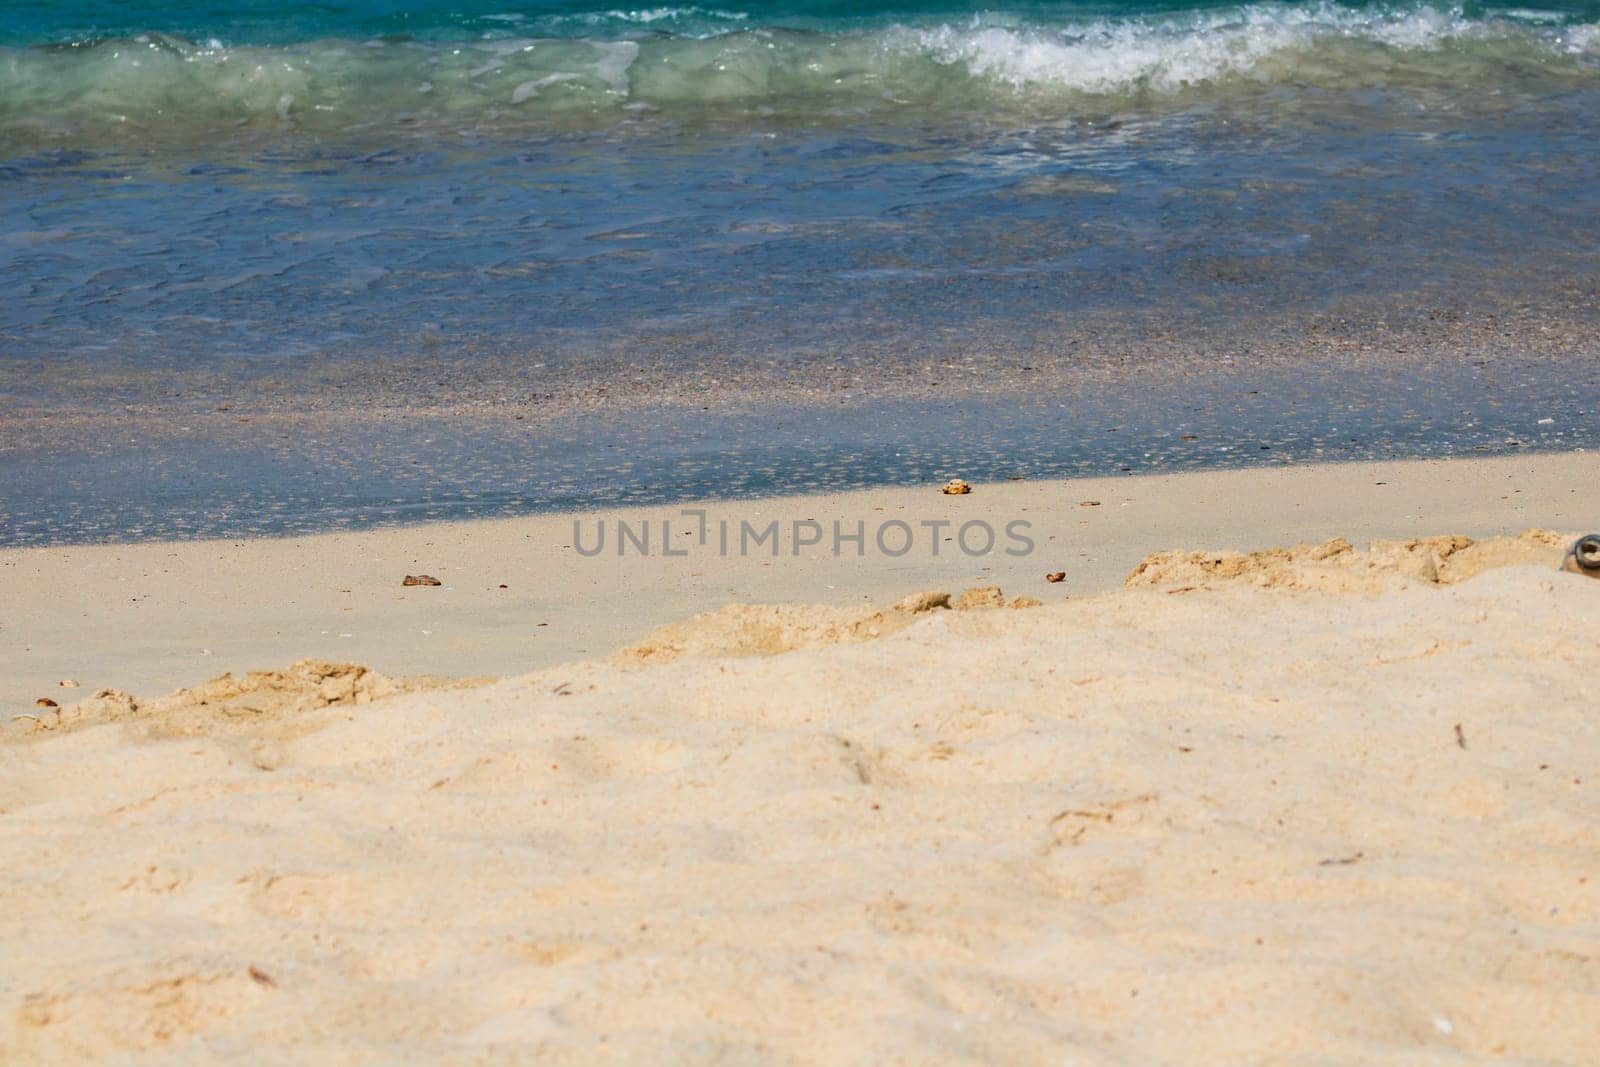 Caribbean beach - Antigua Island by vladispas